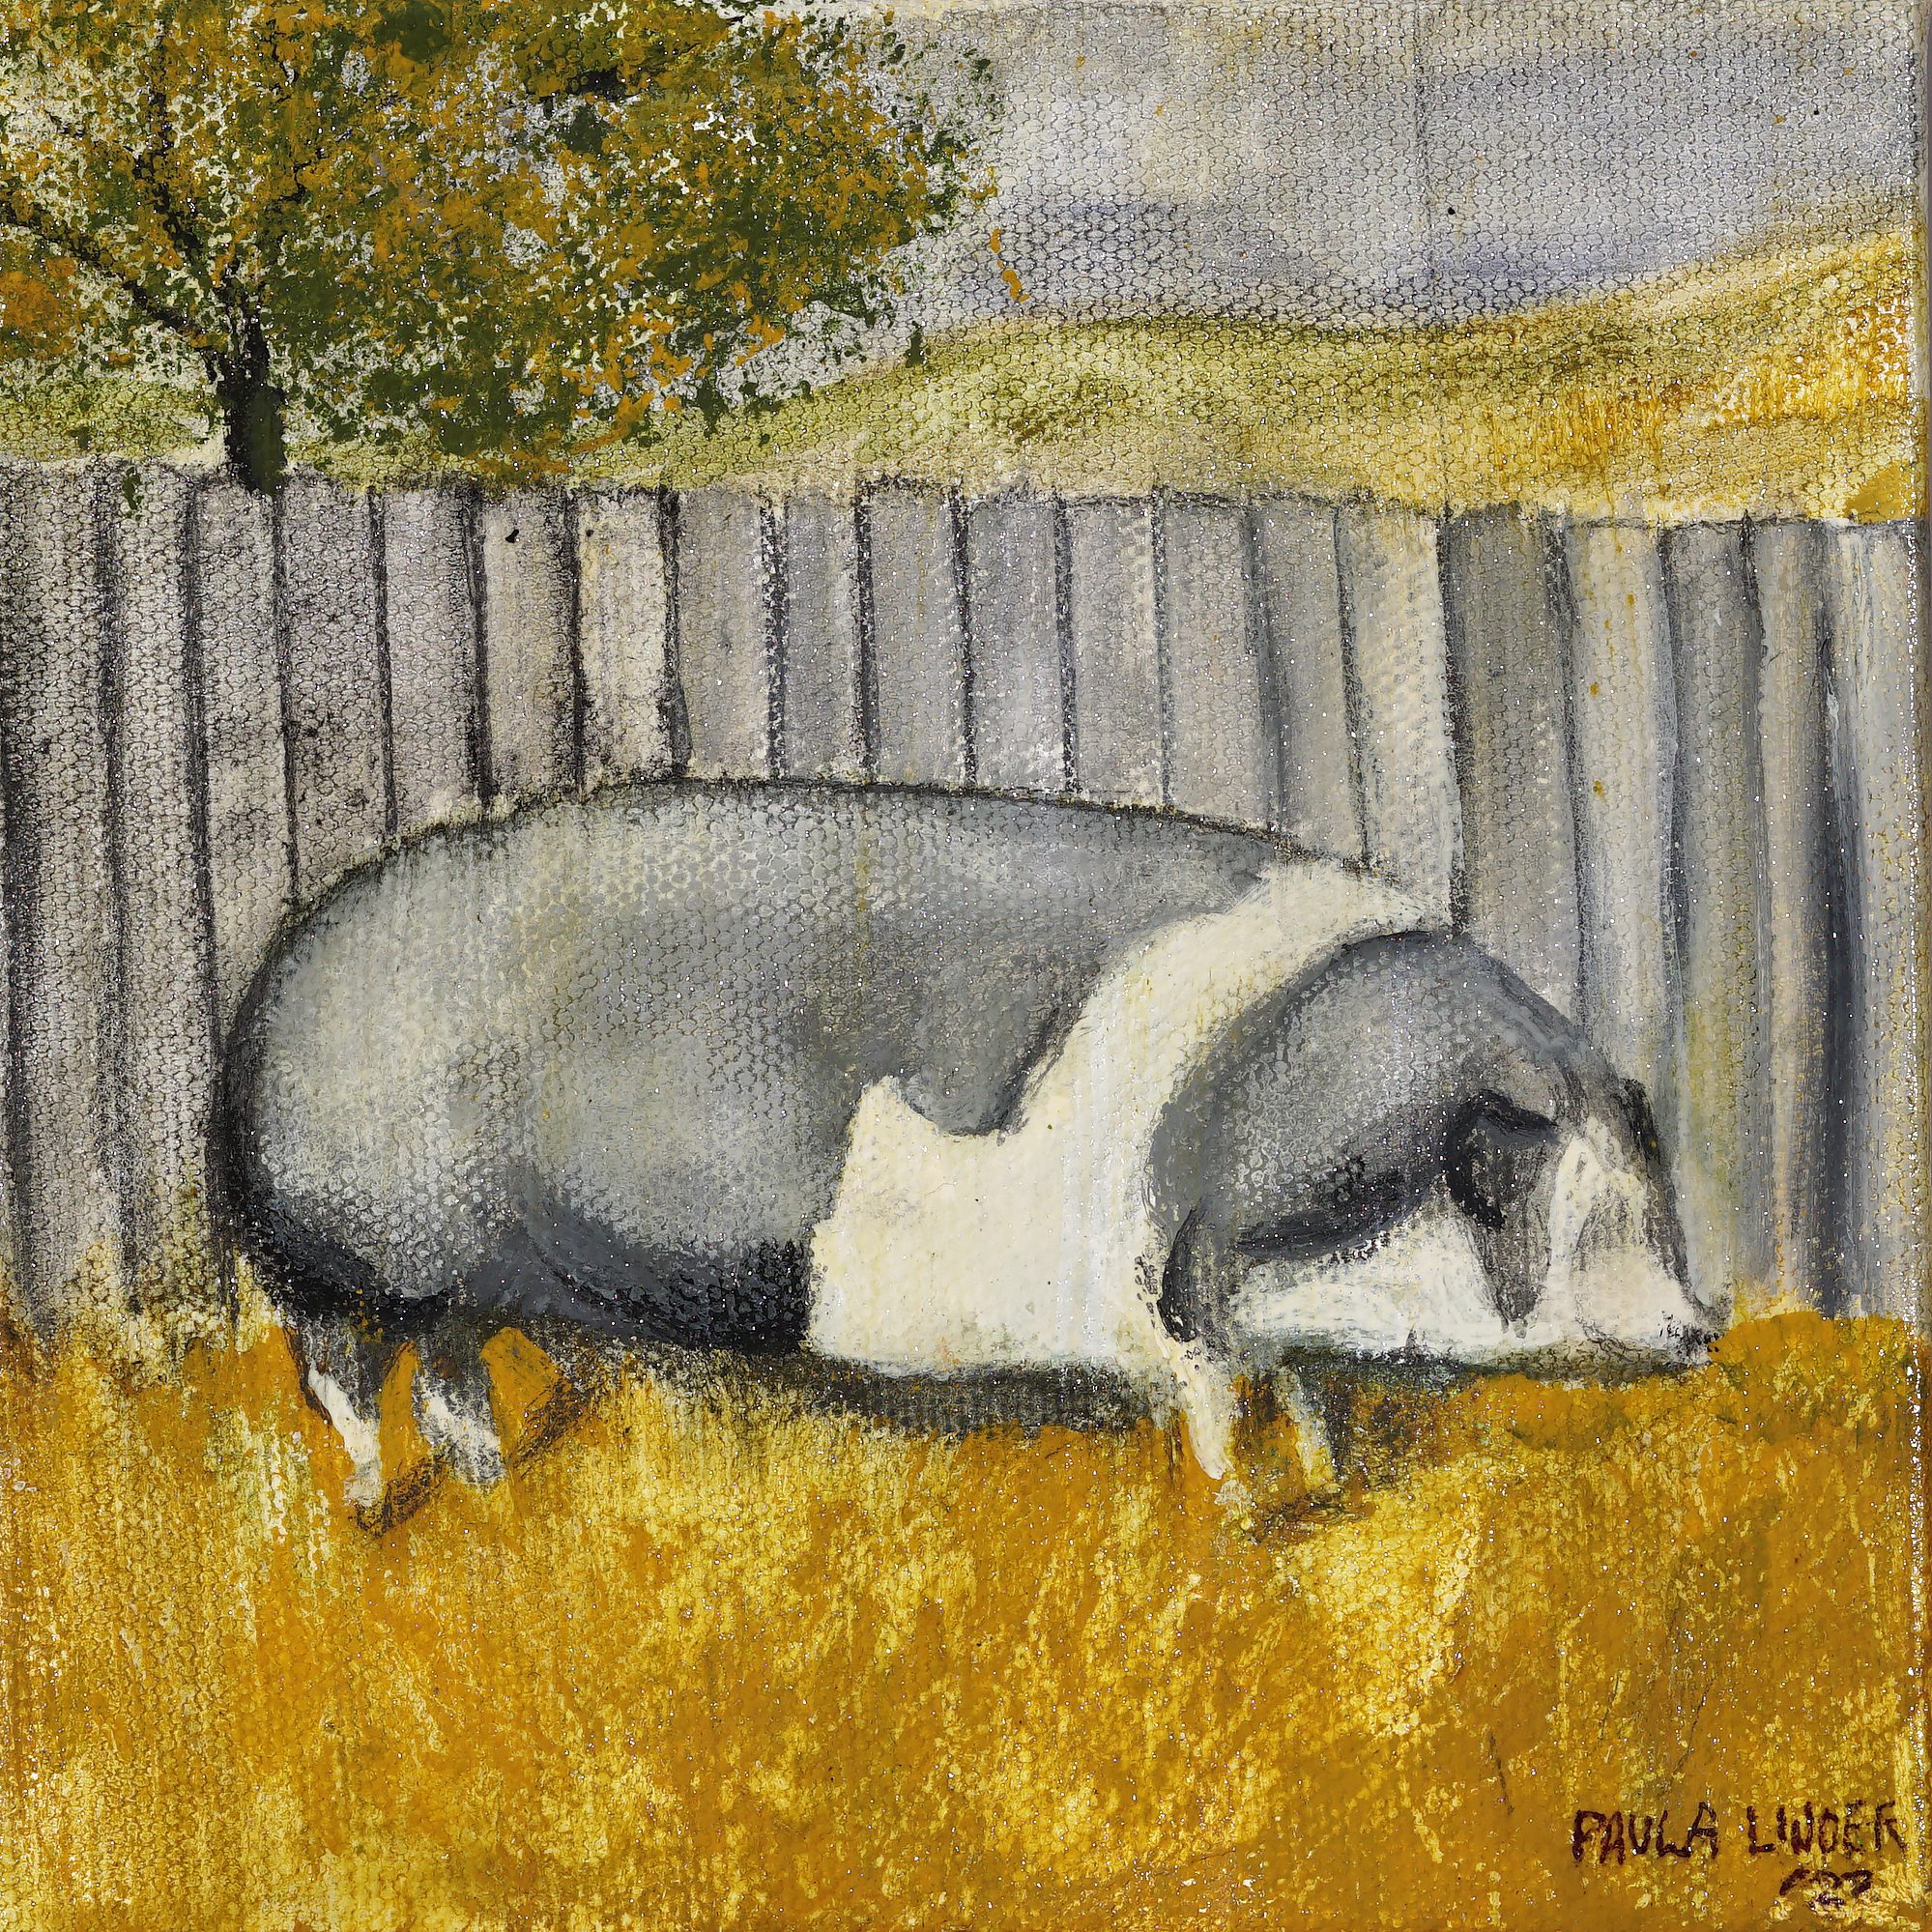 Paula Linder, French Pig